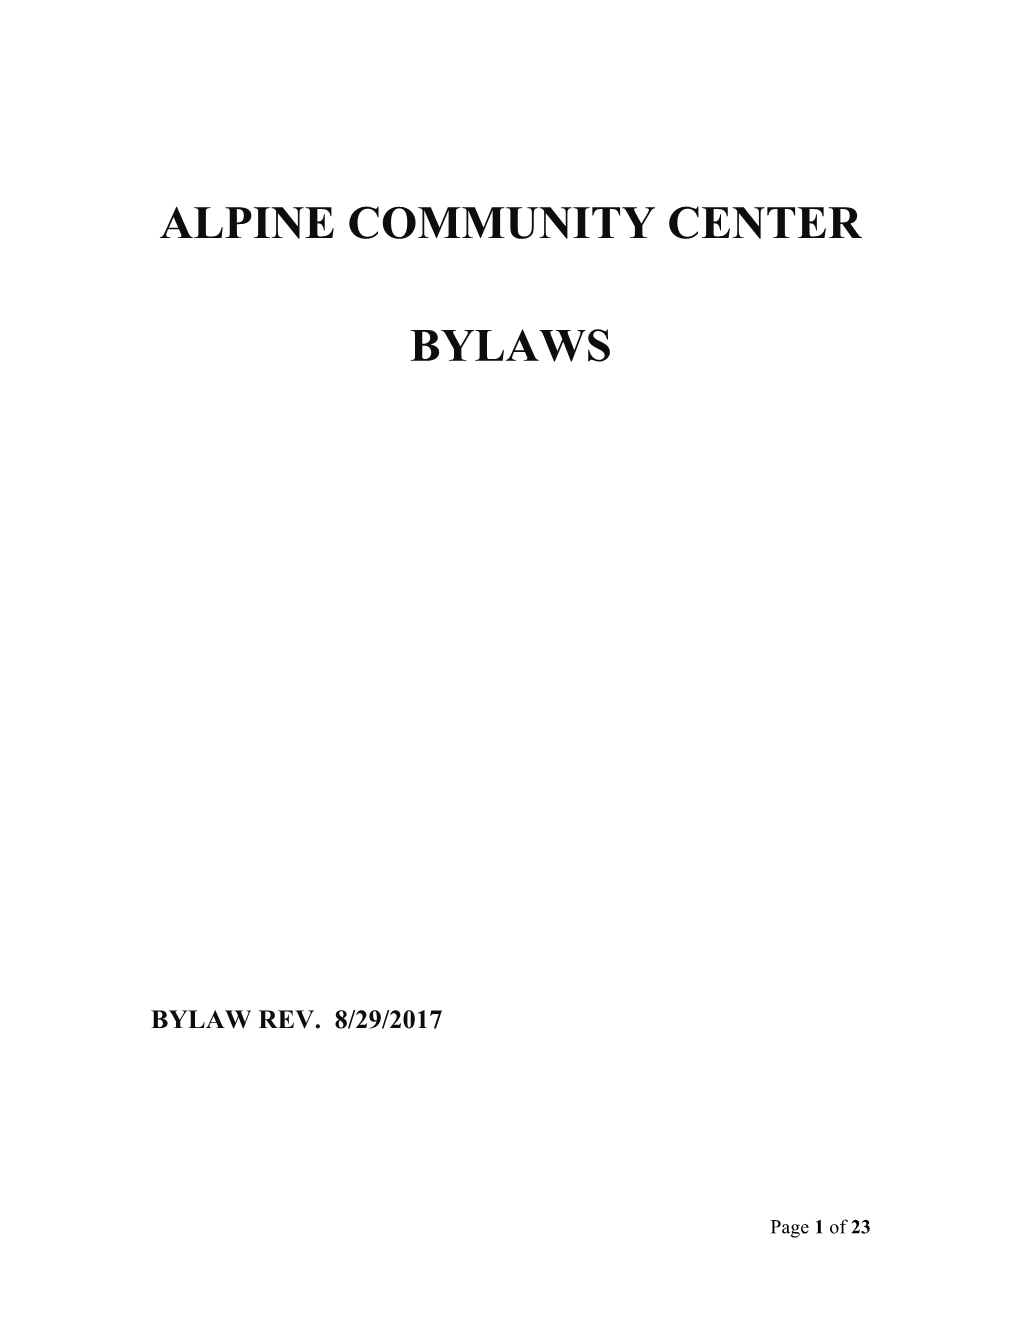 Alpine Community Center